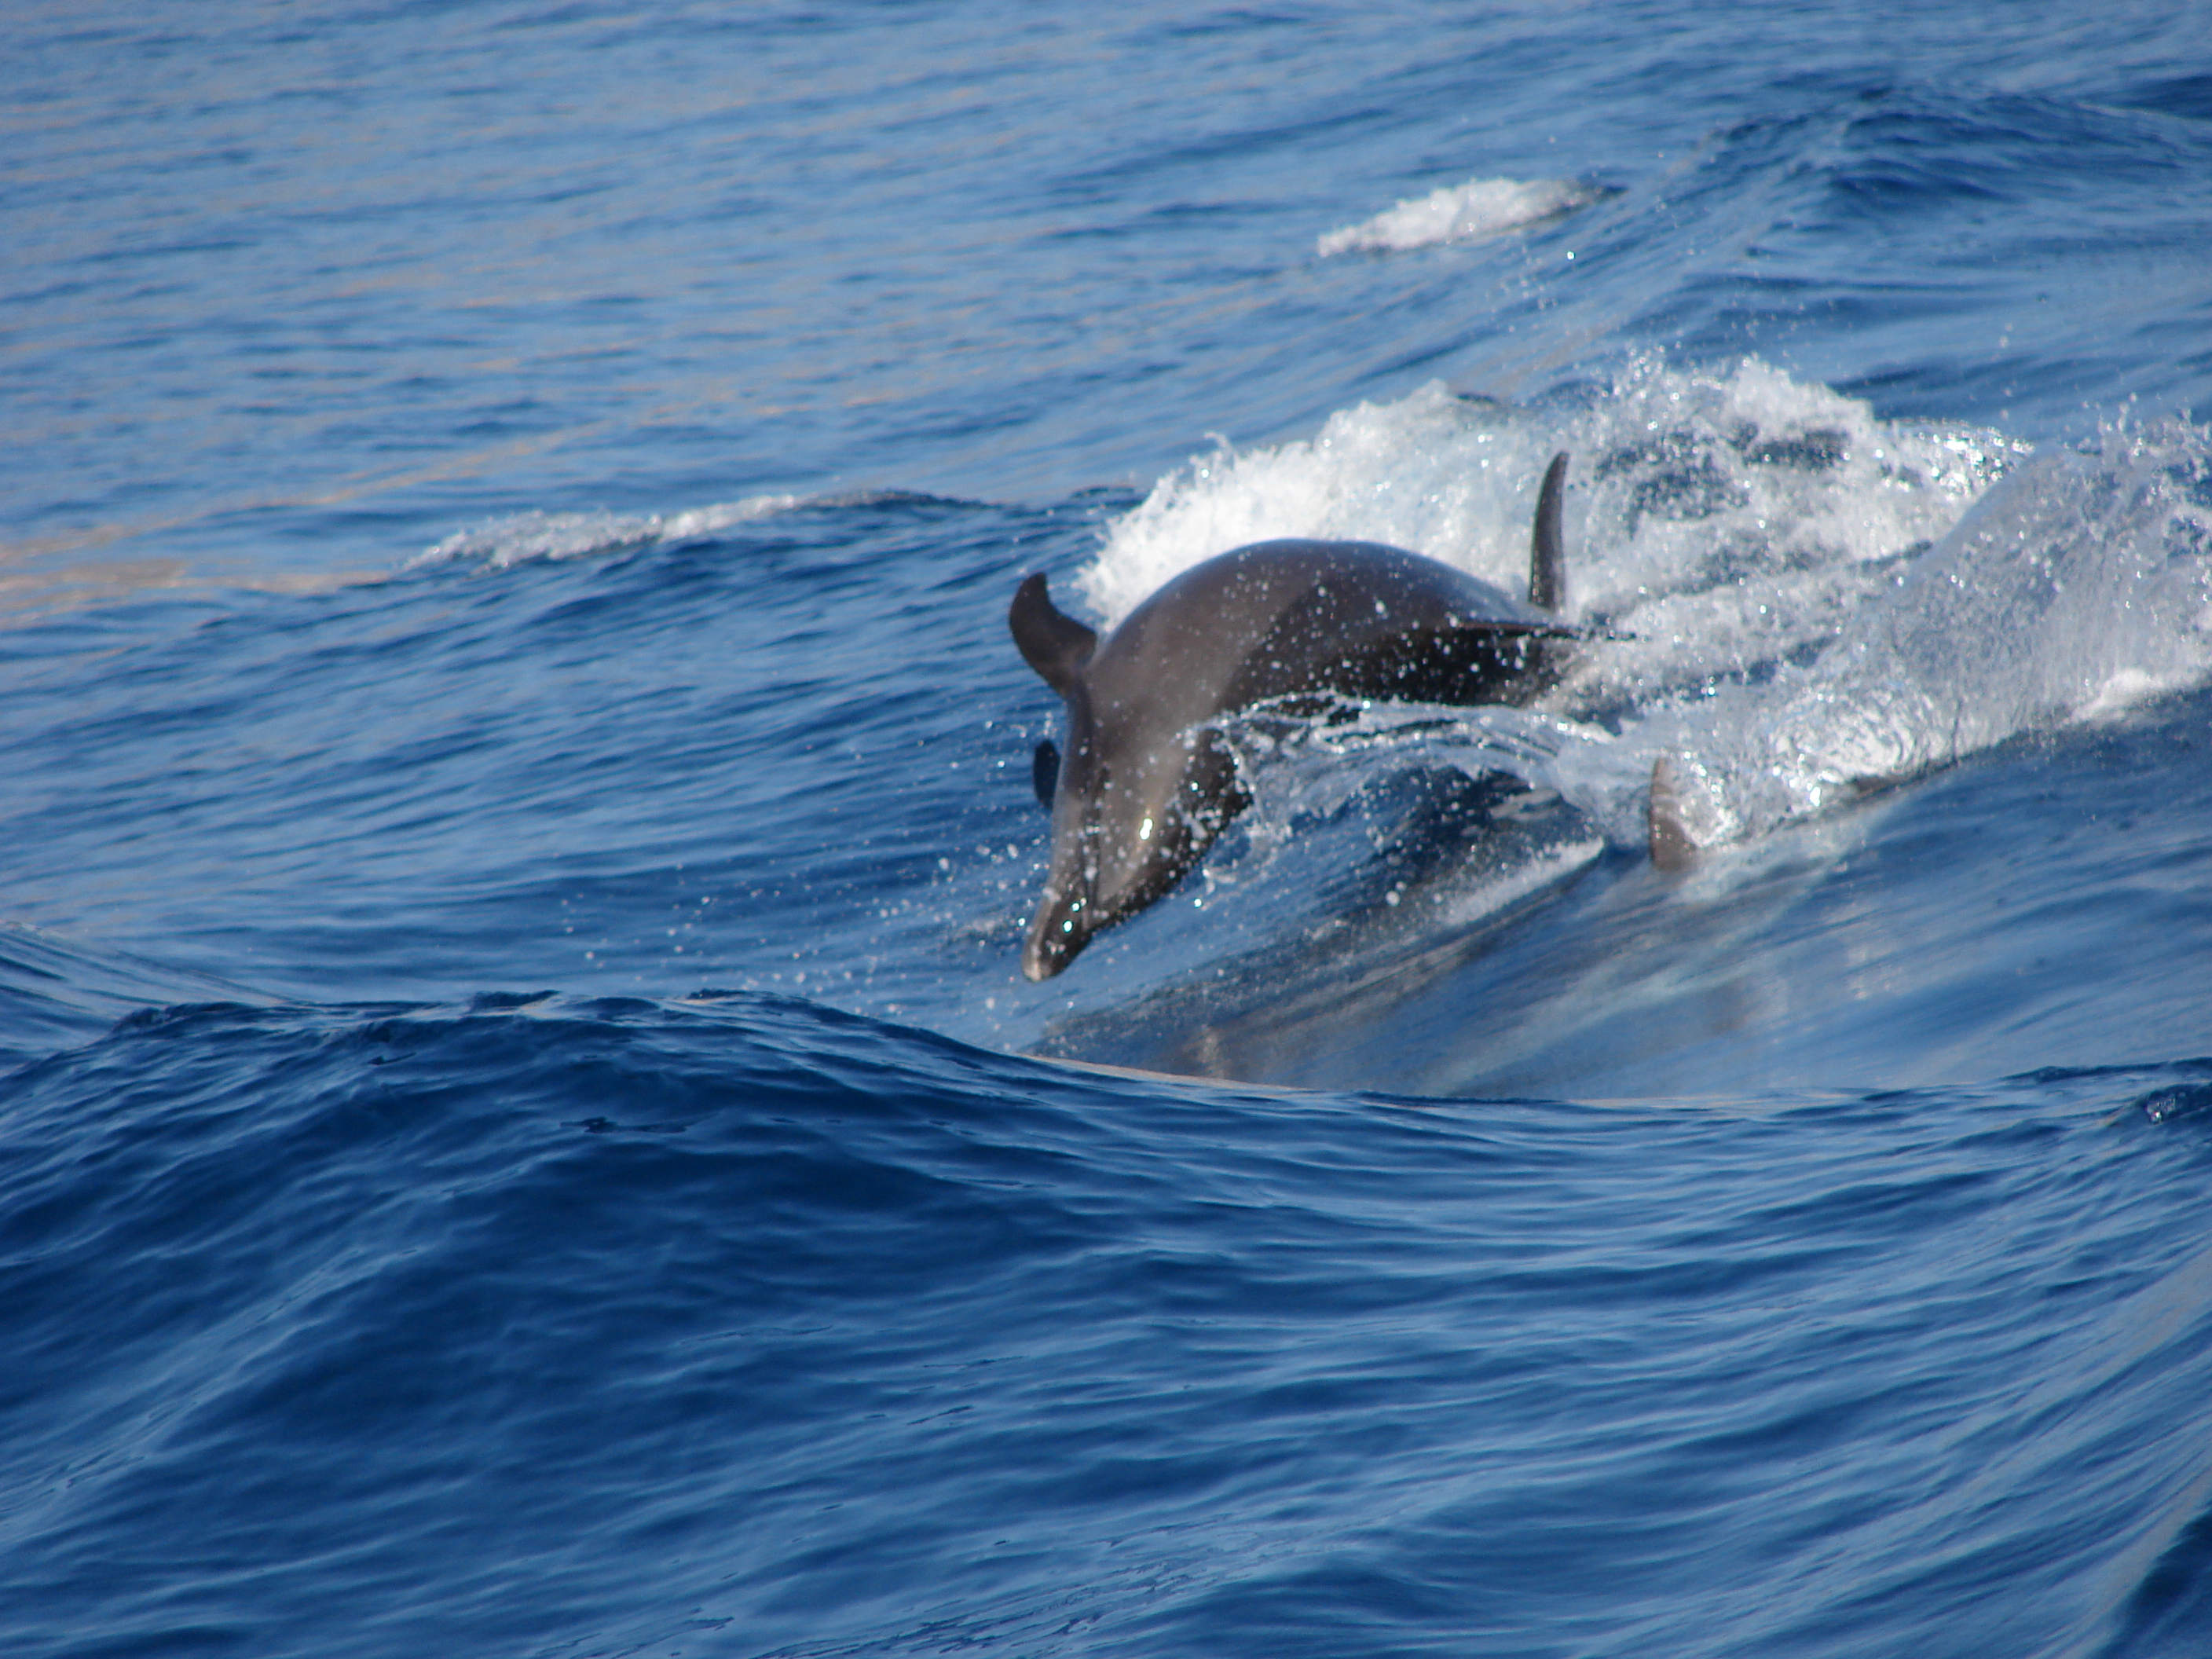 Dolfins following the boat,off tenerife coast